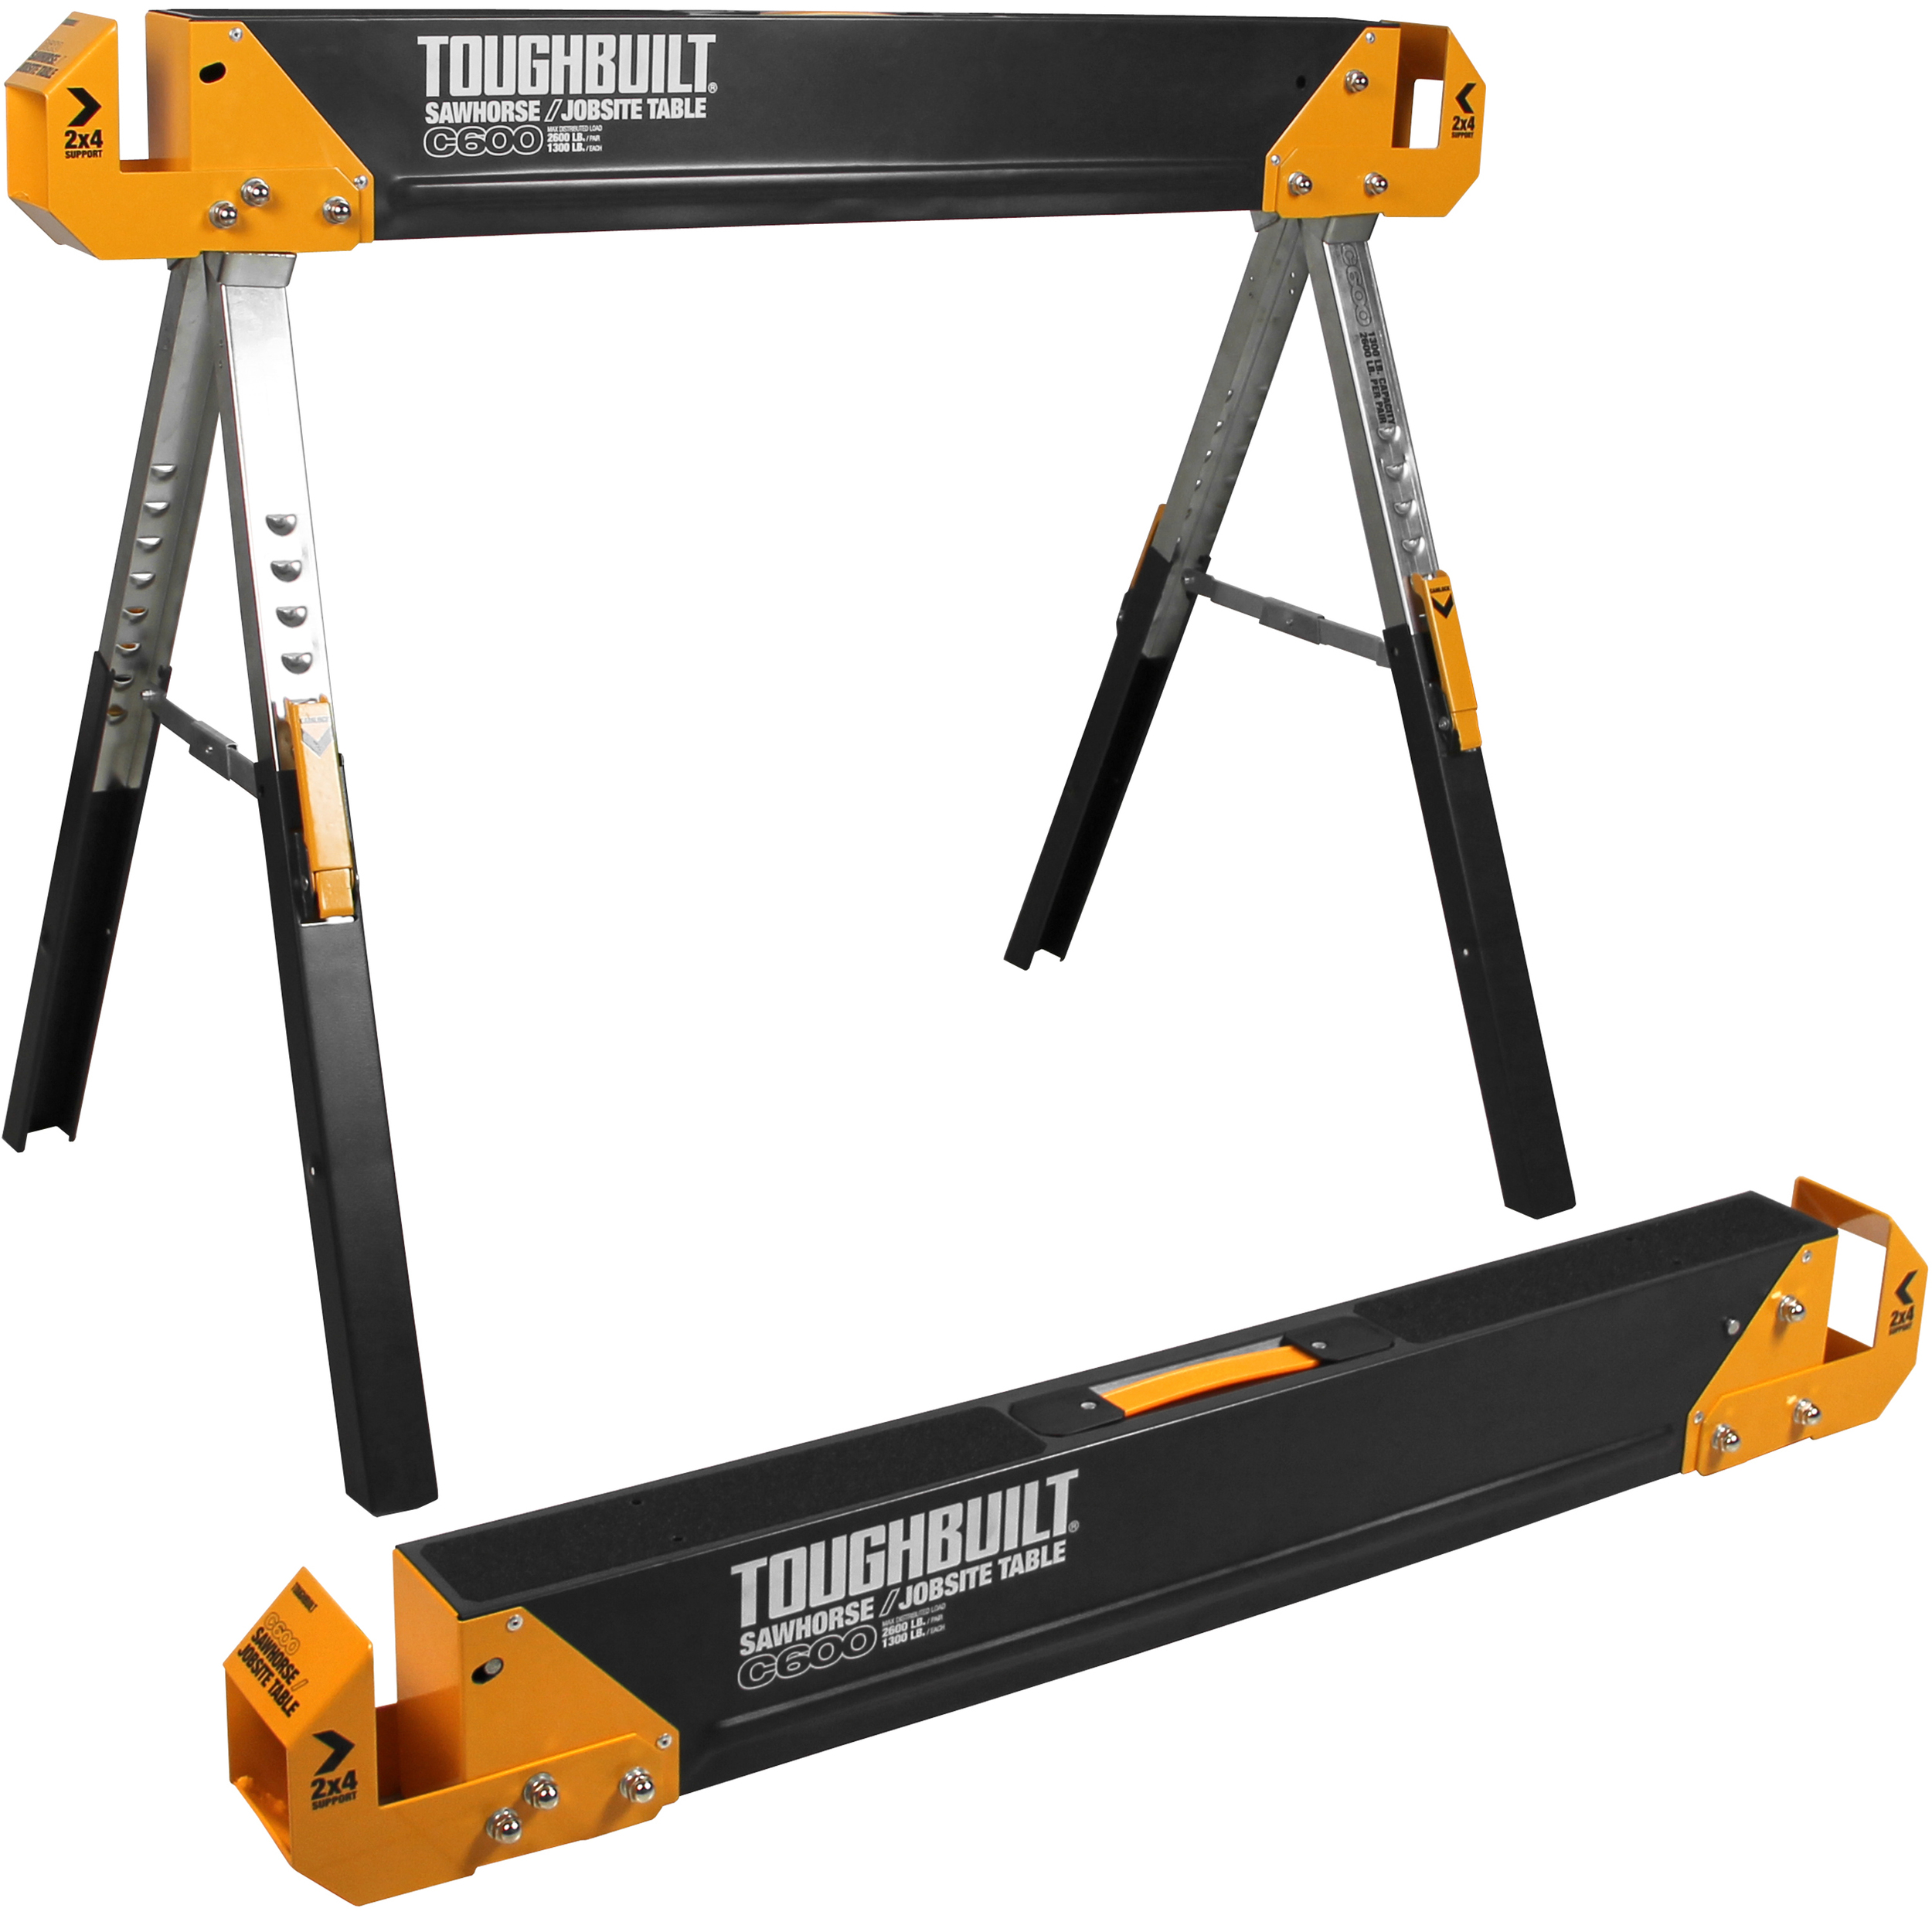 TOUGHBUILT Sawhorse Jobsite Table Steel 1300 lb Load Adjustable Height Width 